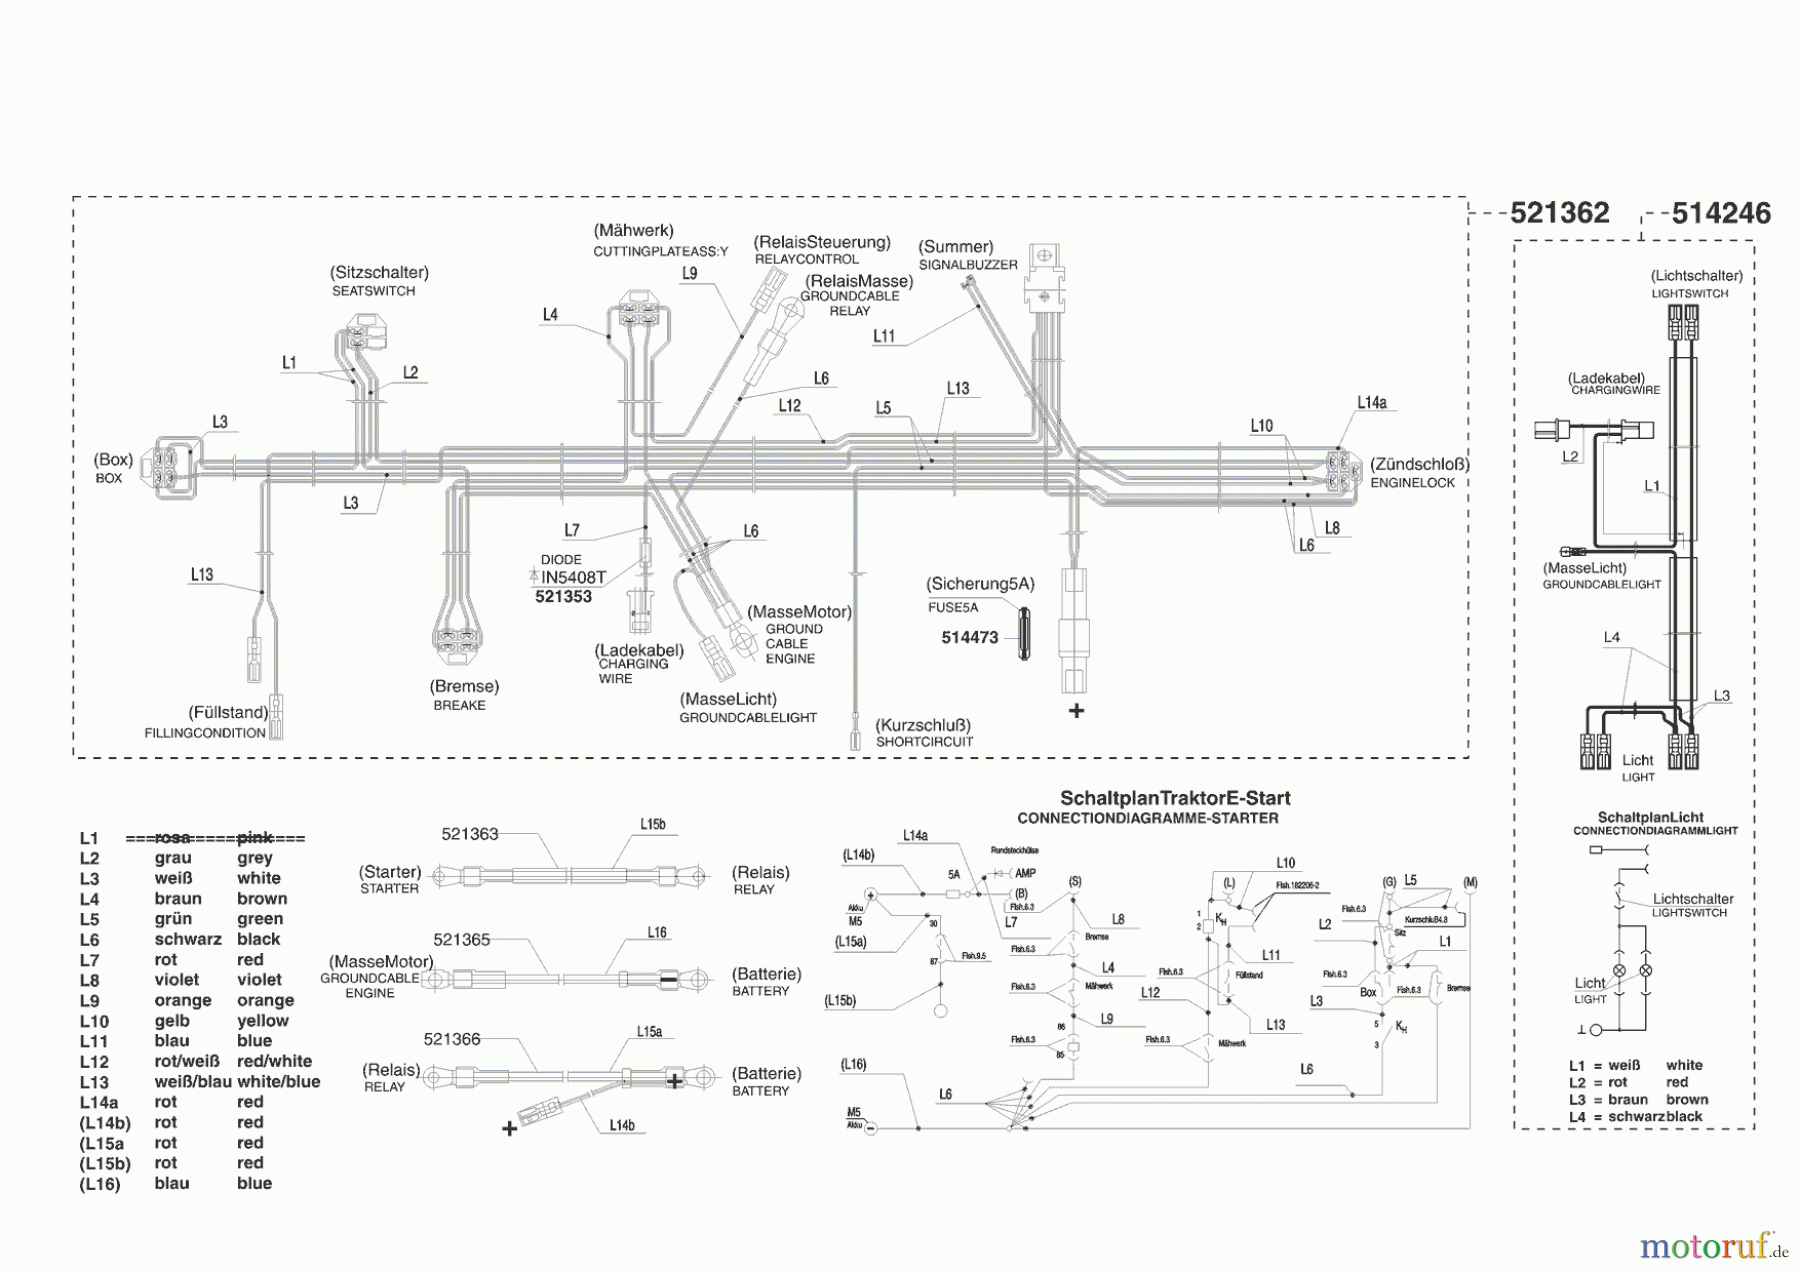  AL-KO Gartentechnik Rasentraktor T850 Seite 8